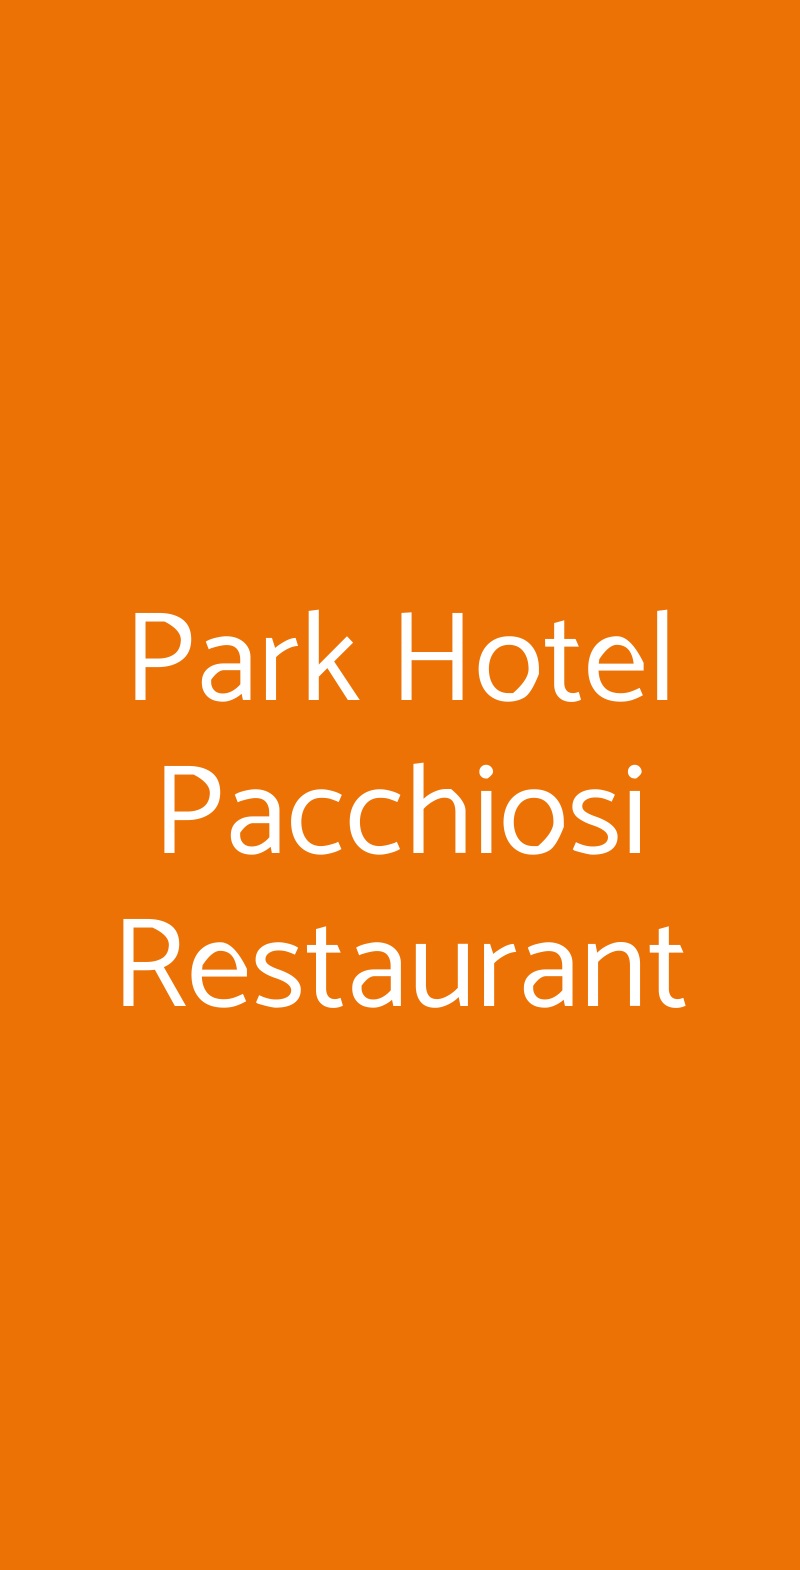 Park Hotel Pacchiosi Restaurant Parma menù 1 pagina